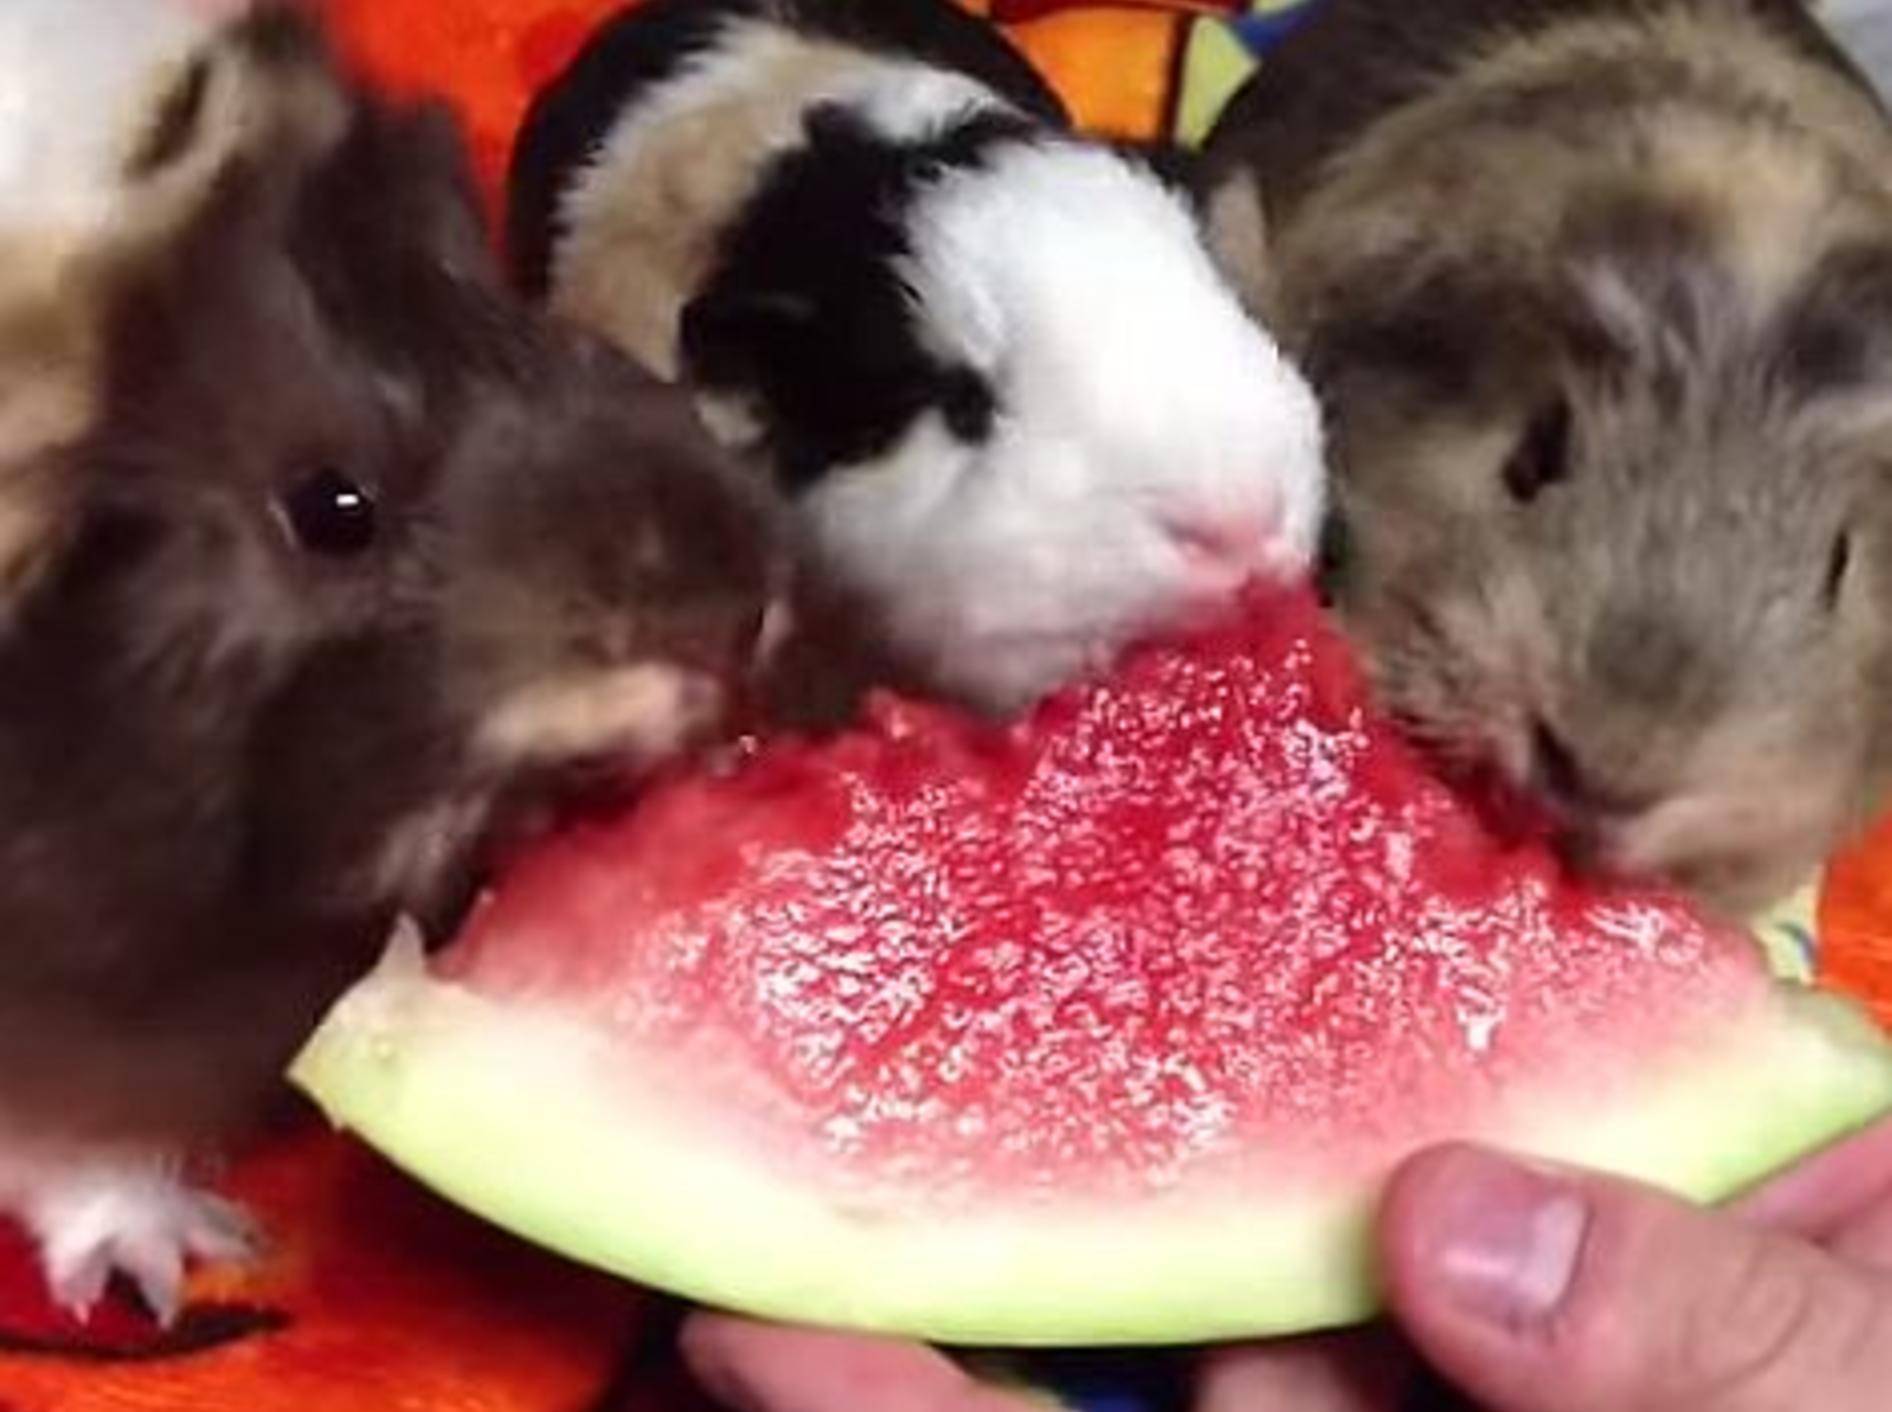 Meerschweinchen-Kumpels: Lecker, Wassermelone!!! –Bild: Youtube / Lydia B